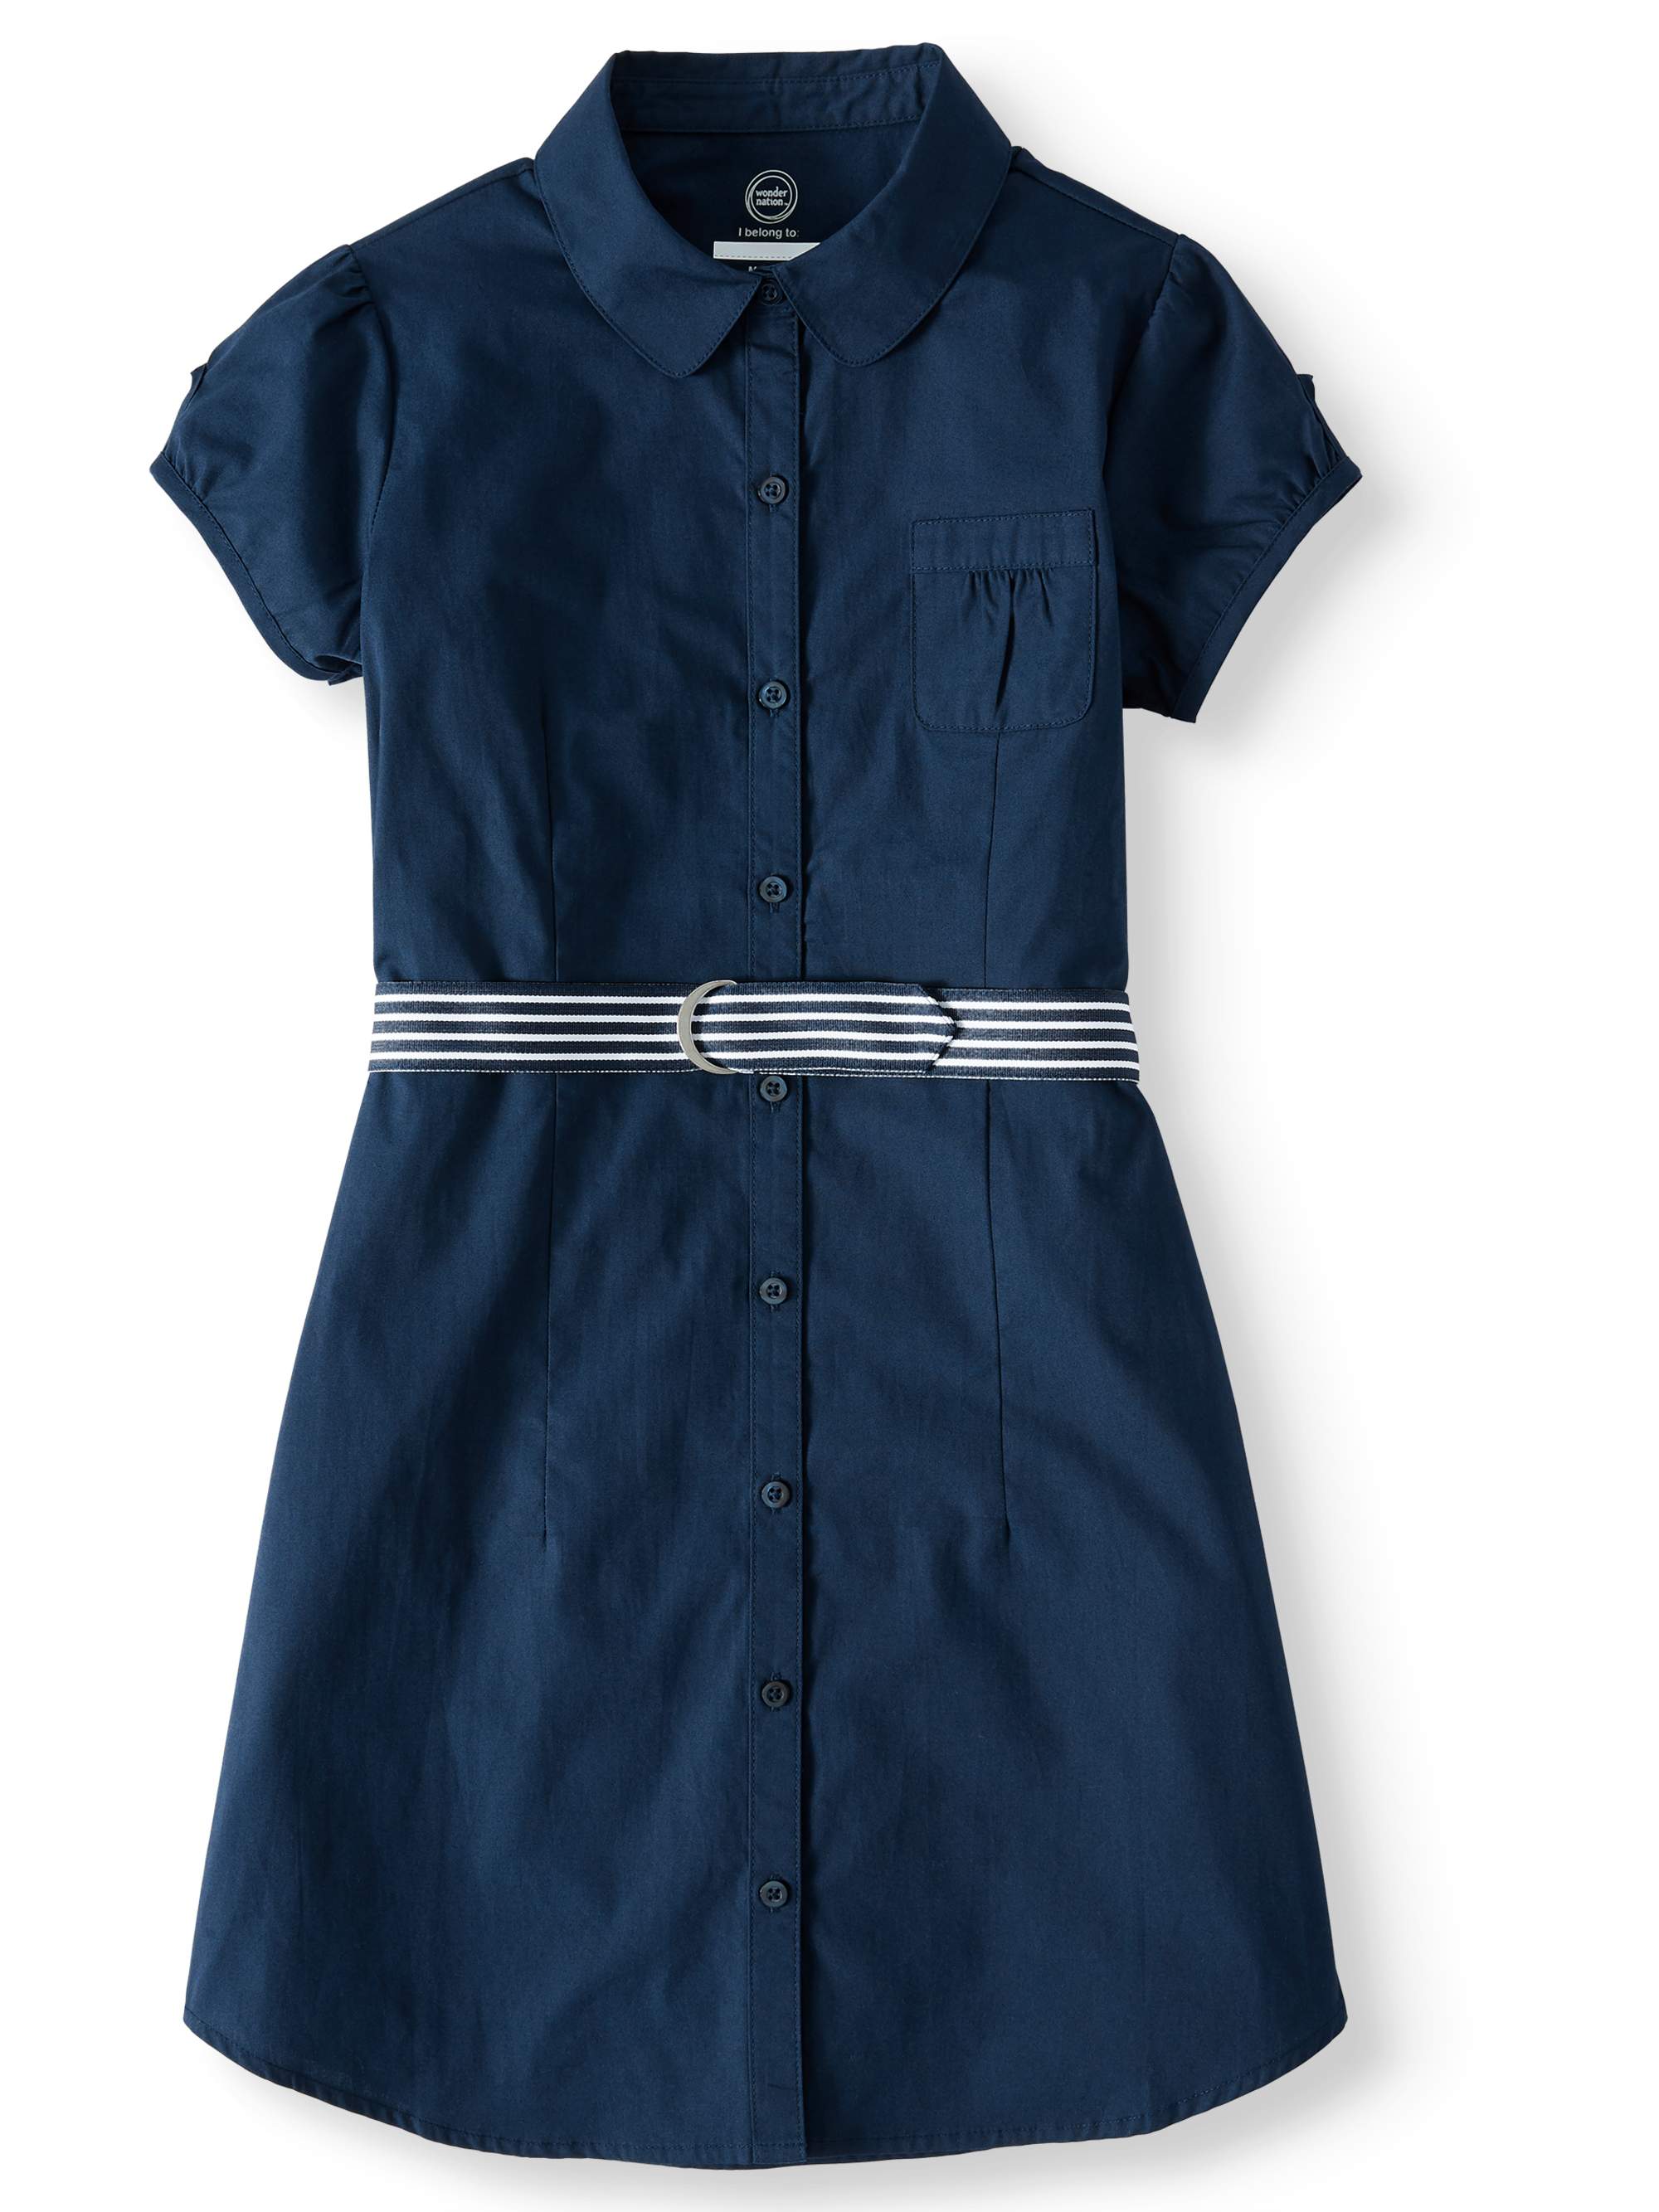 Wonder Nation Girls School Uniform Button-Up Shirt Dress, Sizes 4-16 - image 1 of 3